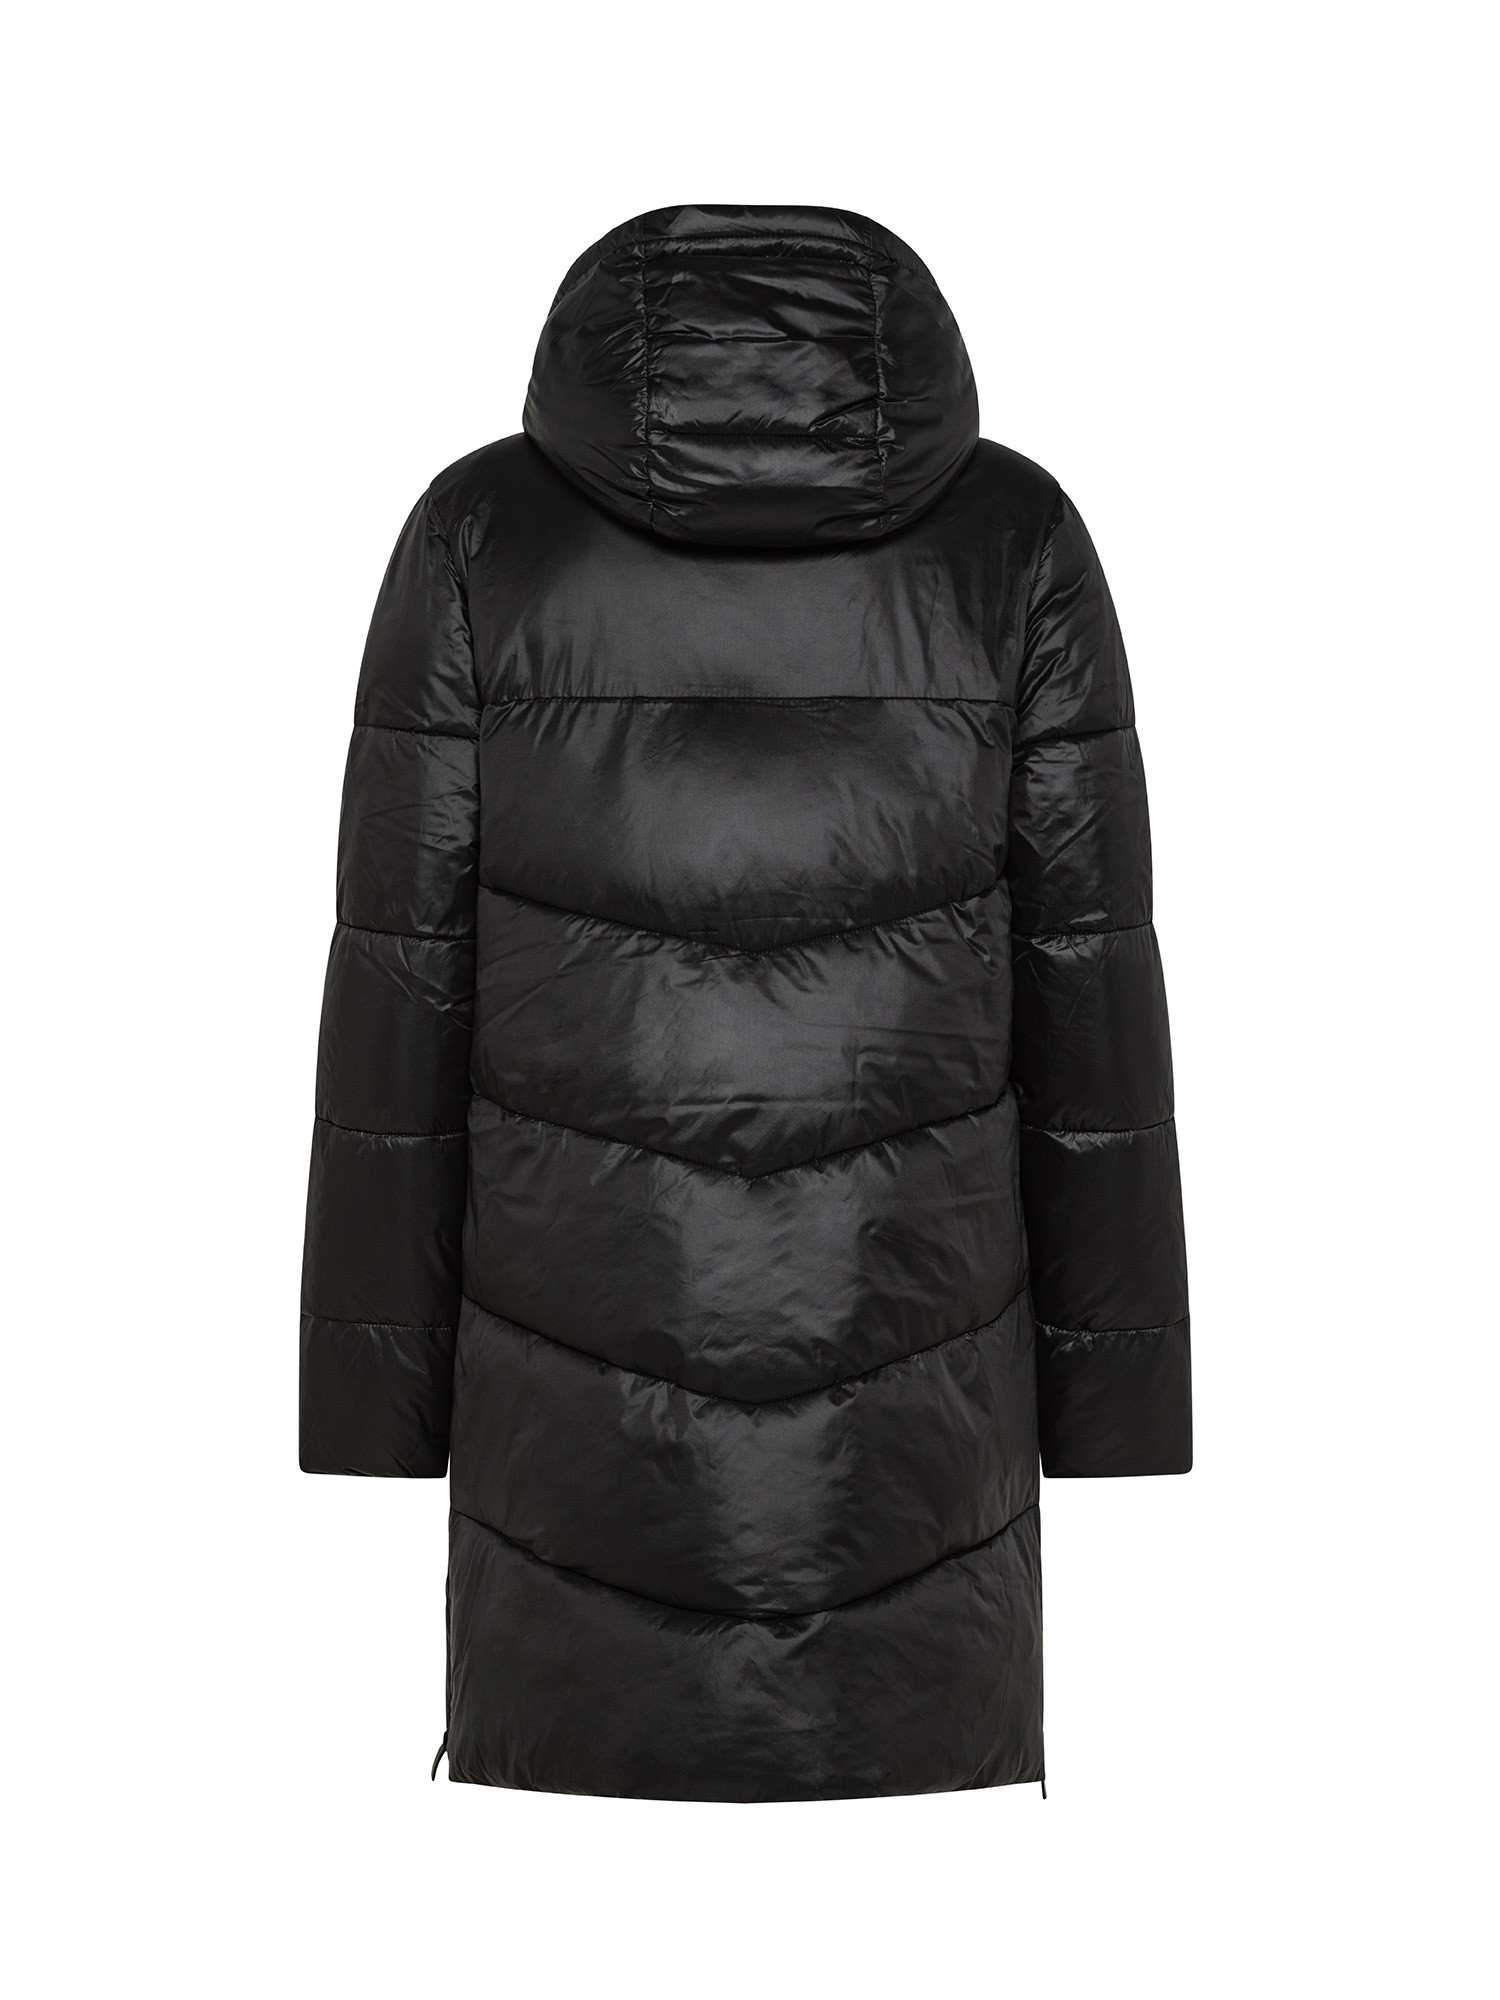 Koan - Long down jacket, Black, large image number 1